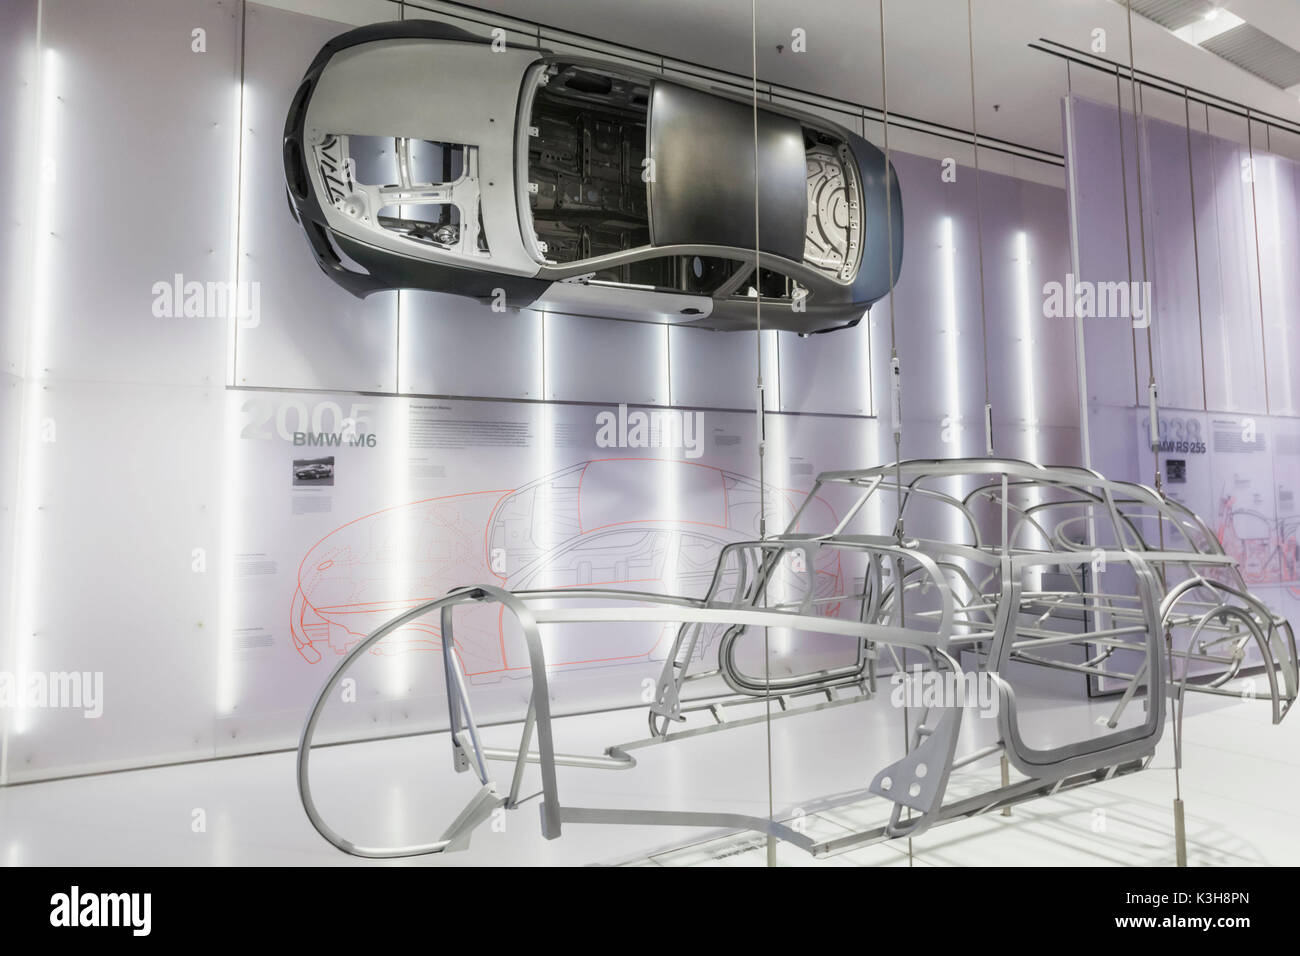 Germany, Bavaria, Munich, BMW Museum, Display of 2005 BMW M6 Car Stock Photo